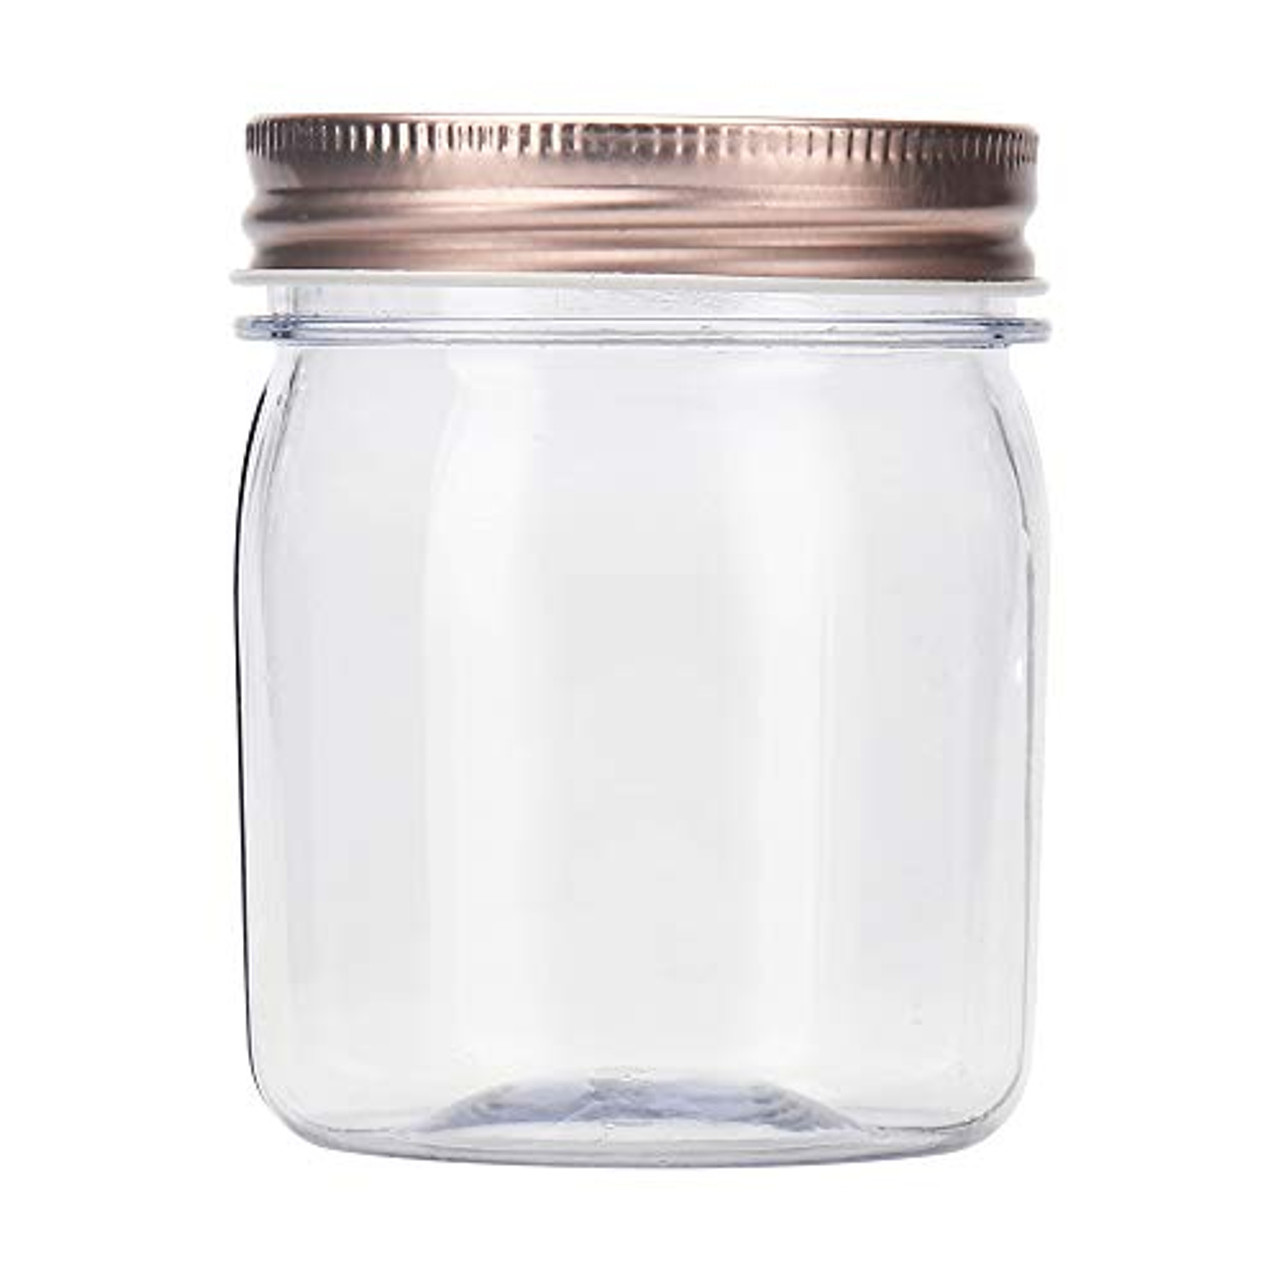 AEGISMILE PLastic jars with lids 32 OZ & 16 OZ 24 pack Clear